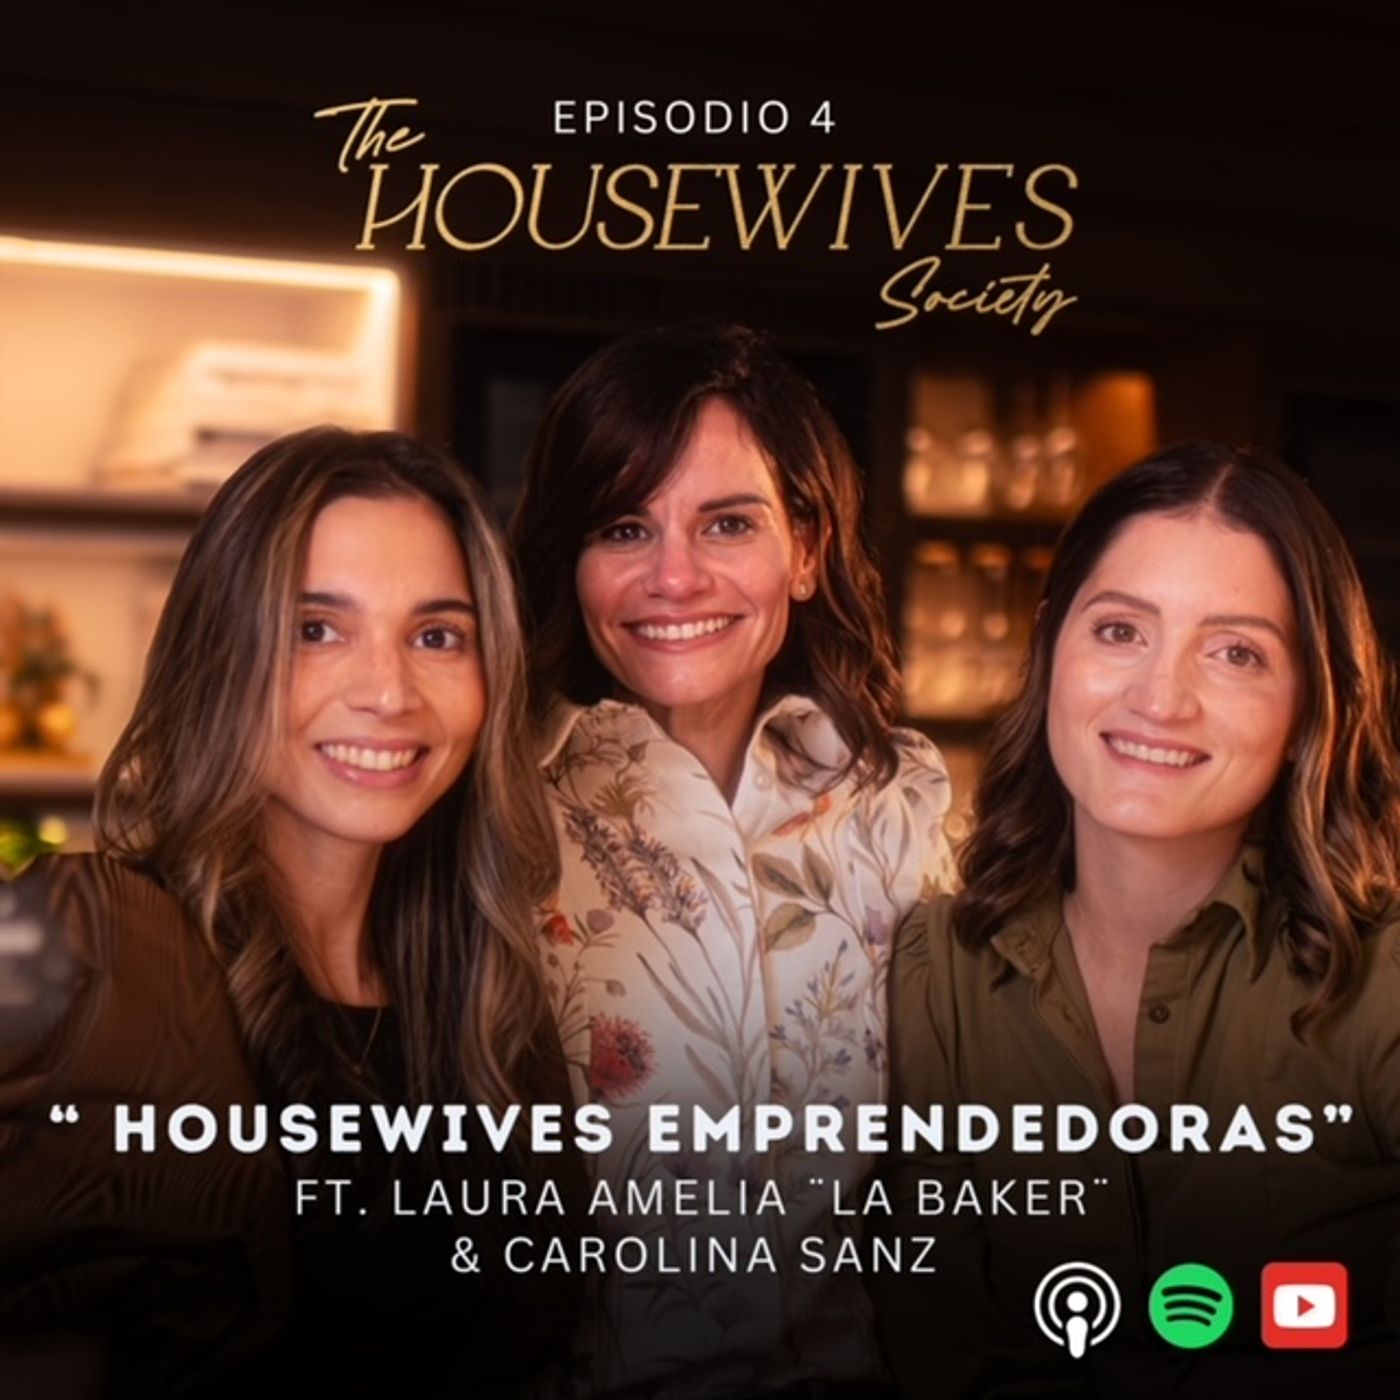 04- HouseWives Emprendedoras Ft. Laura Amelia "la Baker" & Carolina Sanz